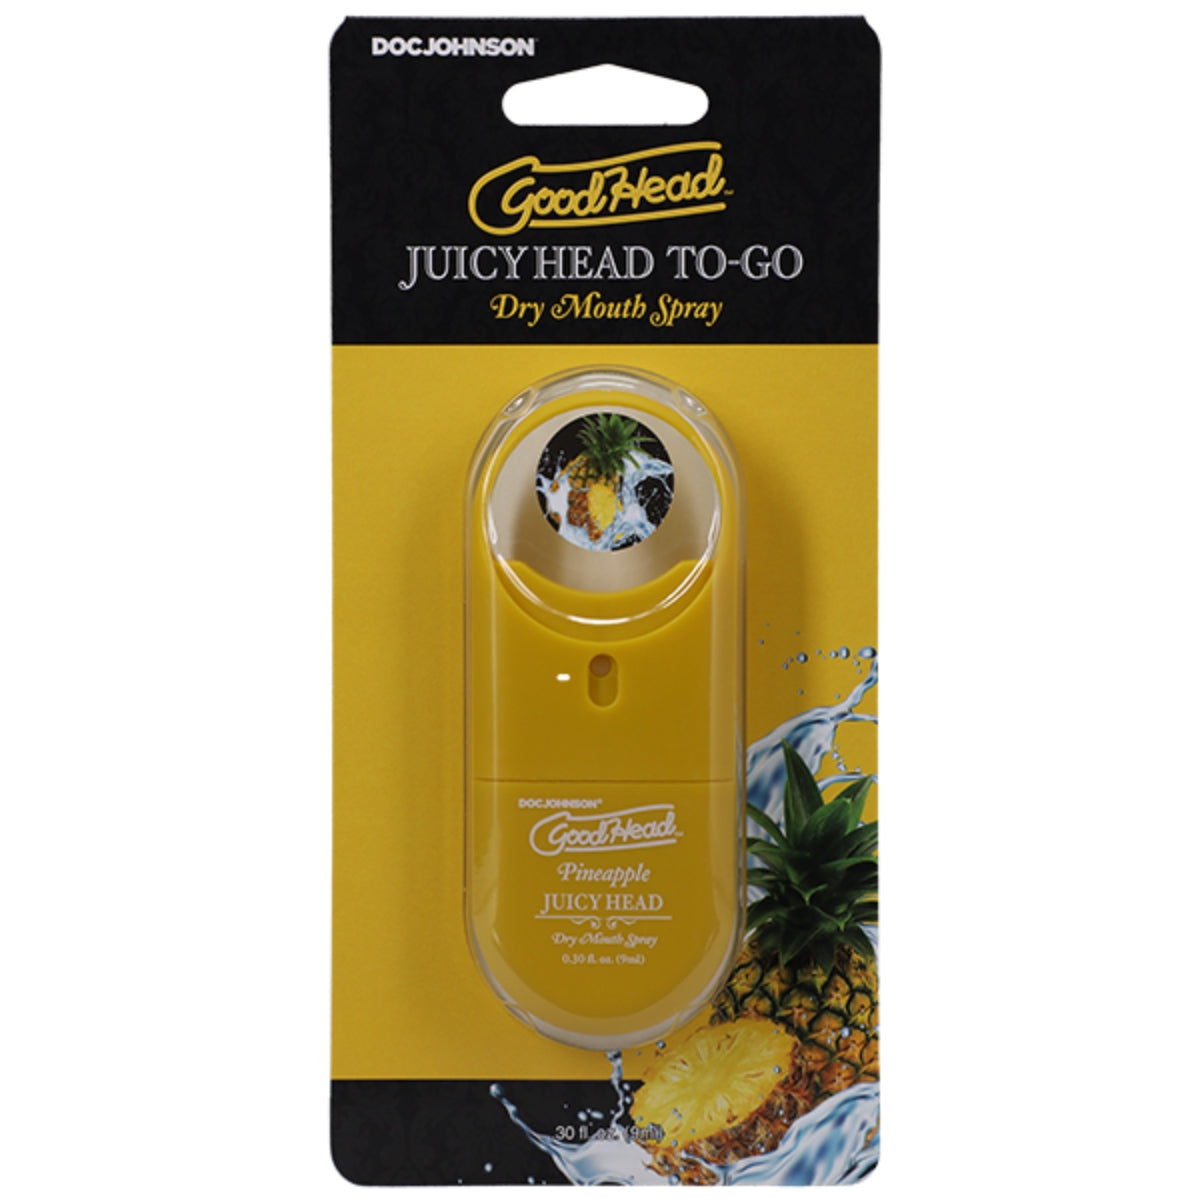 Flavoured Dry Mouth Spray Goodhead | Juicy Head Dry Mouth Spray To-Go Pineapple - 0.30 fl oz    | Awaken My Sexuality